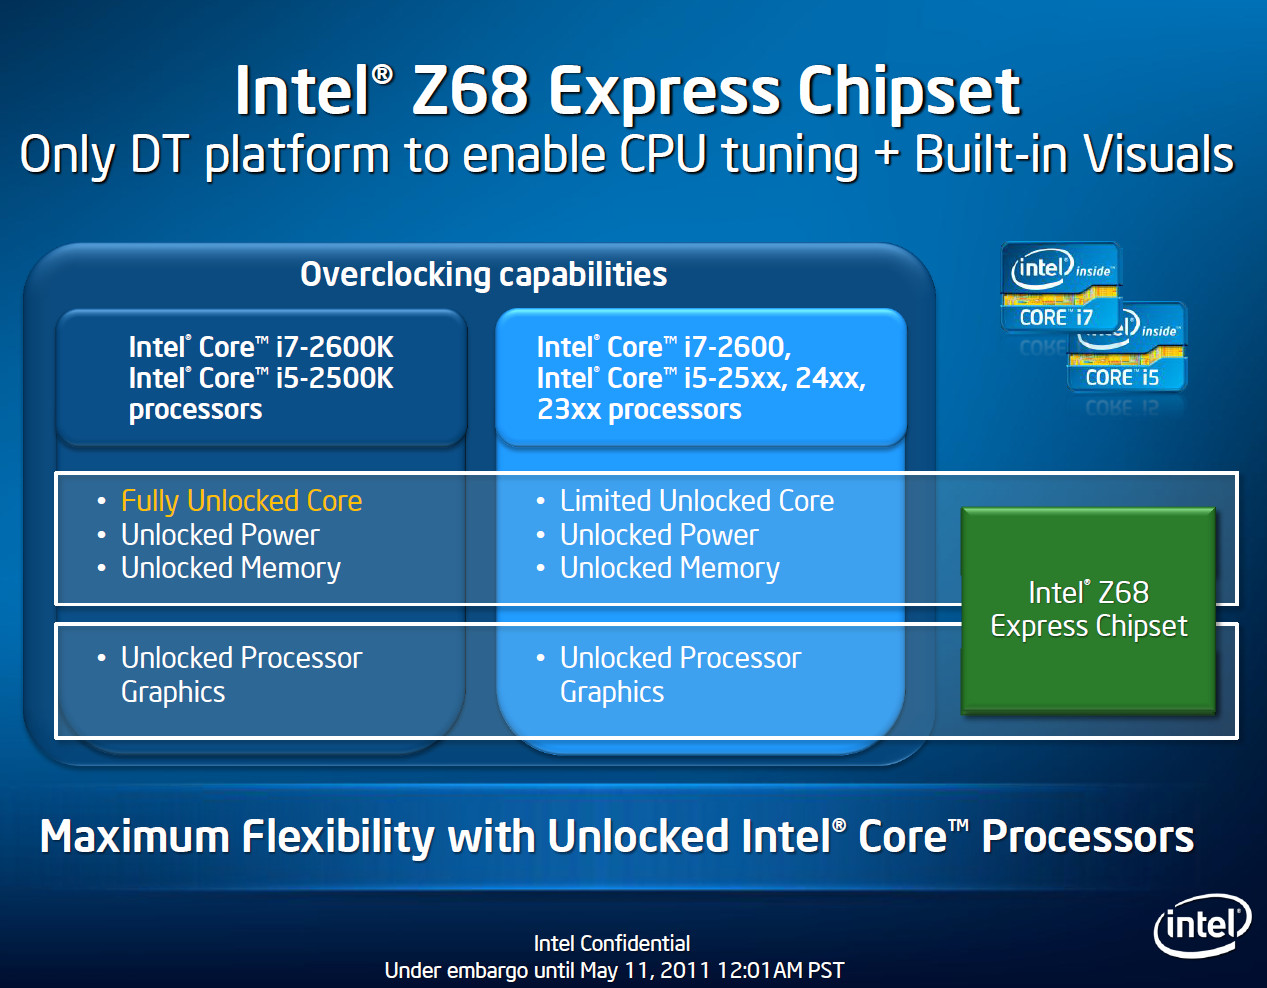 7 series chipset. Intel z68. Z68 чипсет. Intel Core Unlocked. Z68 Express Chipset топология.